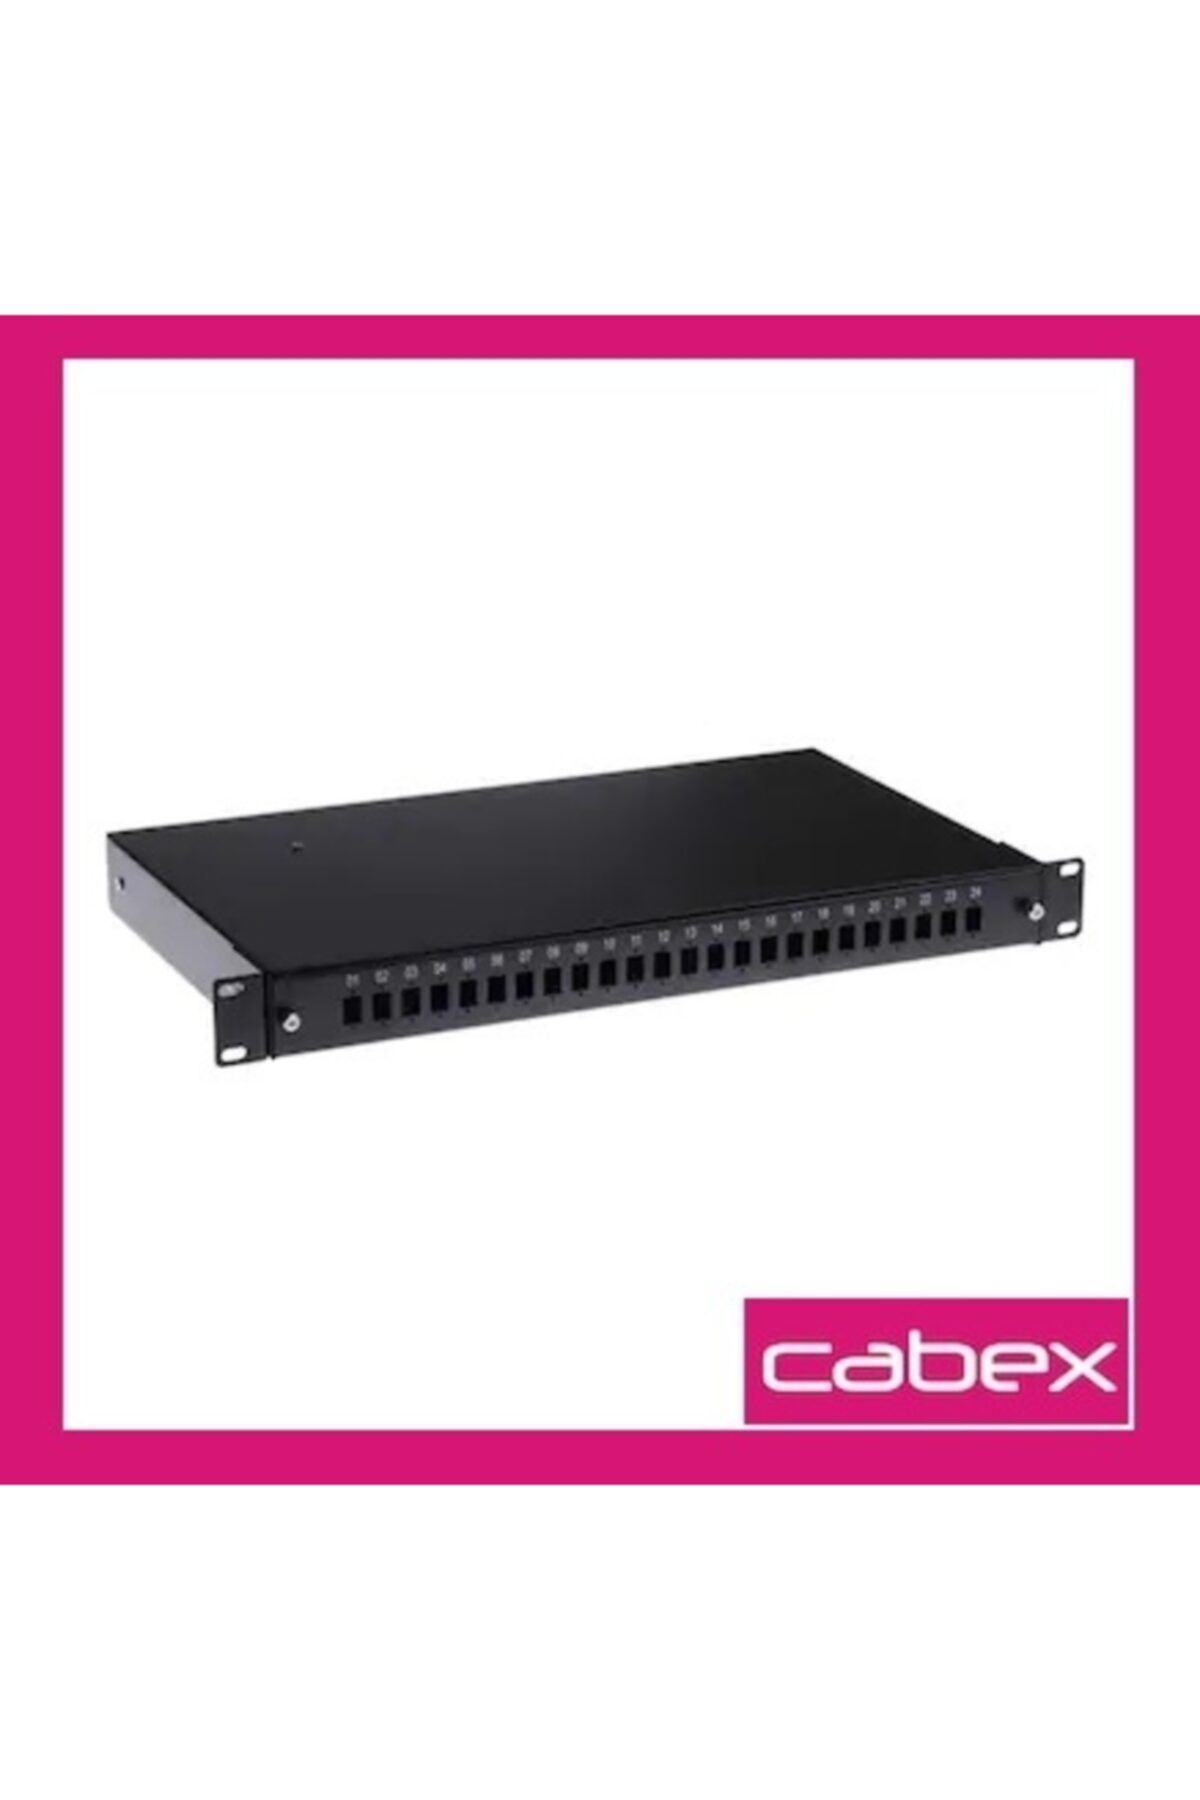 cabex Cabex - 24 Port 1u 19" Lc Fiber Optik Patch Panel